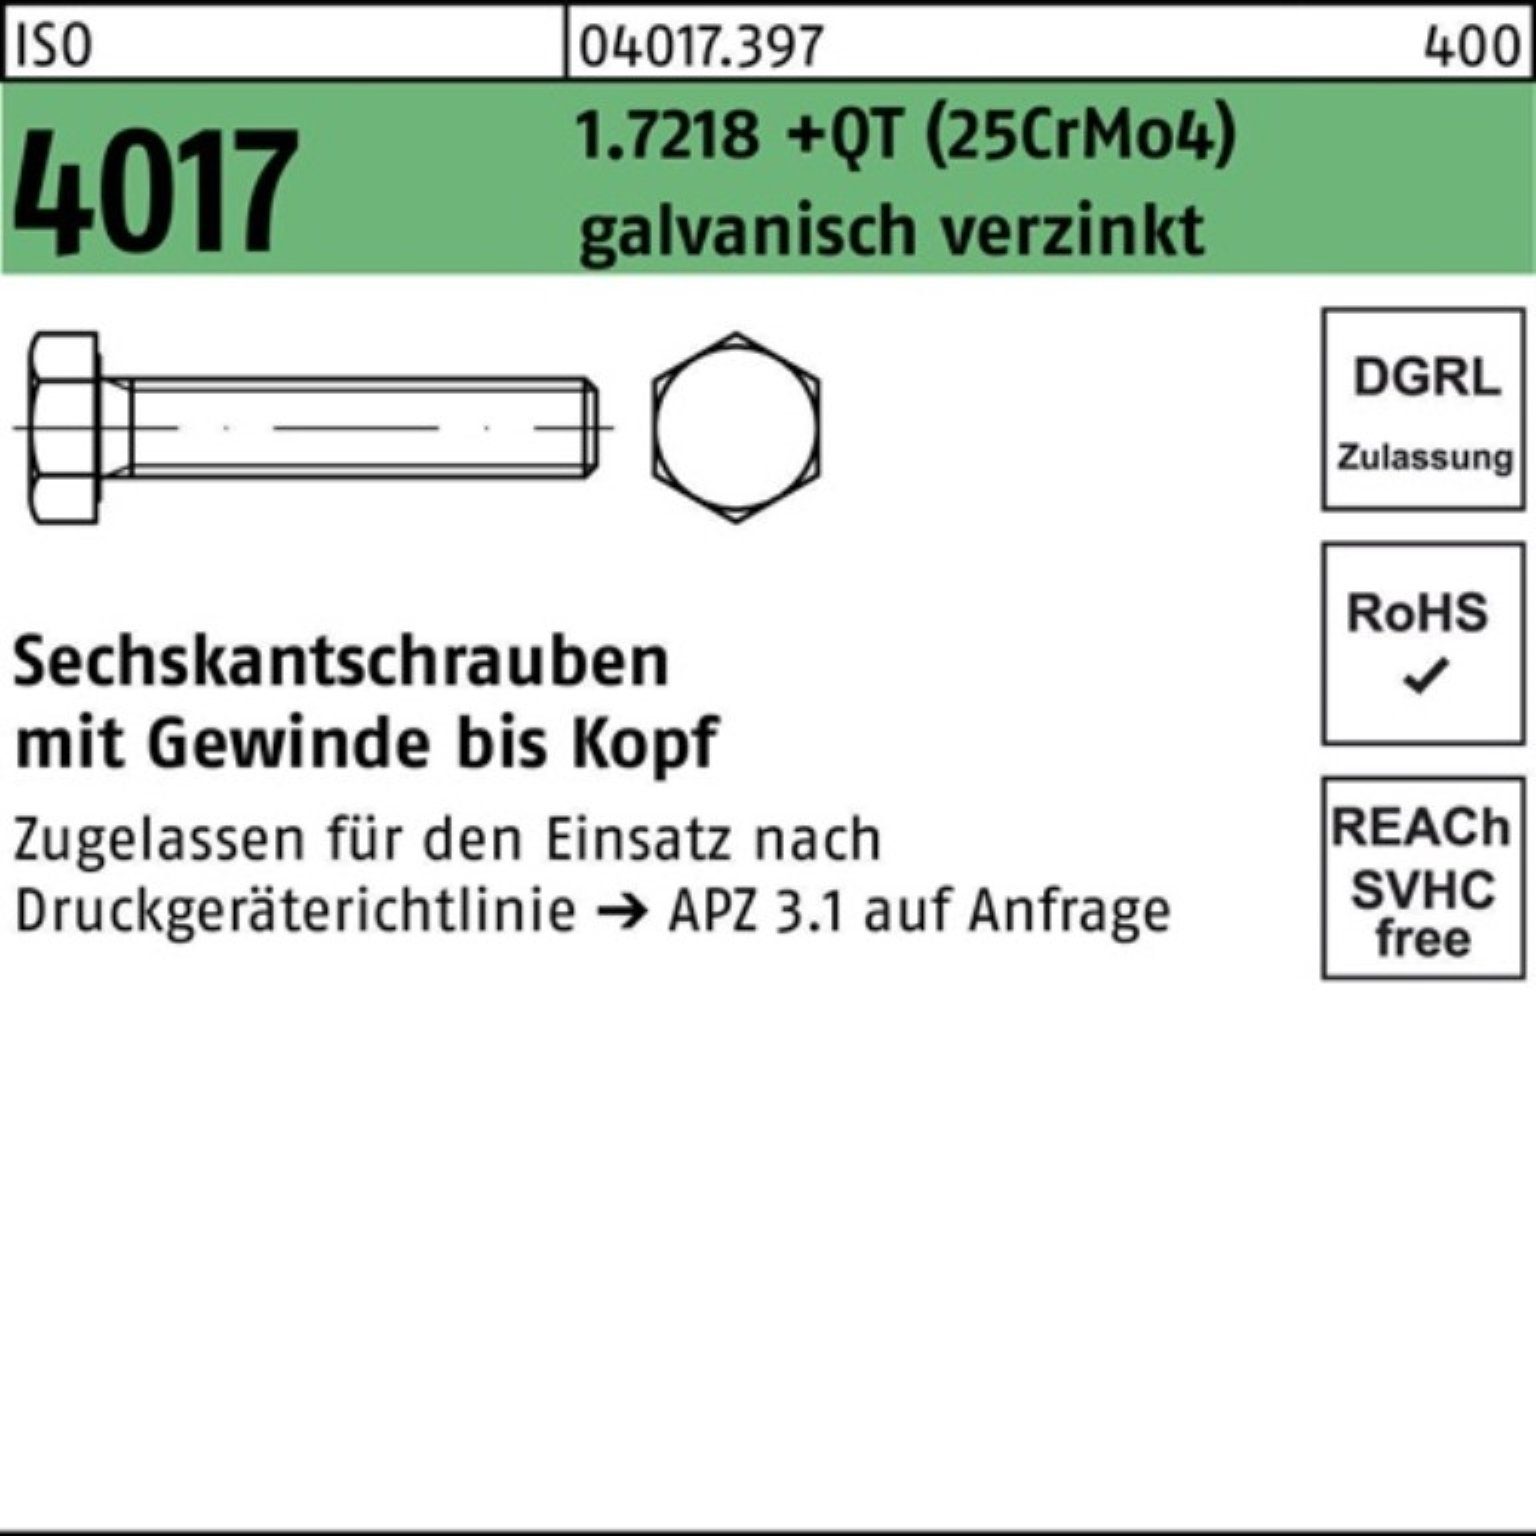 Sechskantschraube Sechskantschraube g Pack Bufab +QT 100er 1.7218 4017 VG ISO M12x60 (25CrMo4)